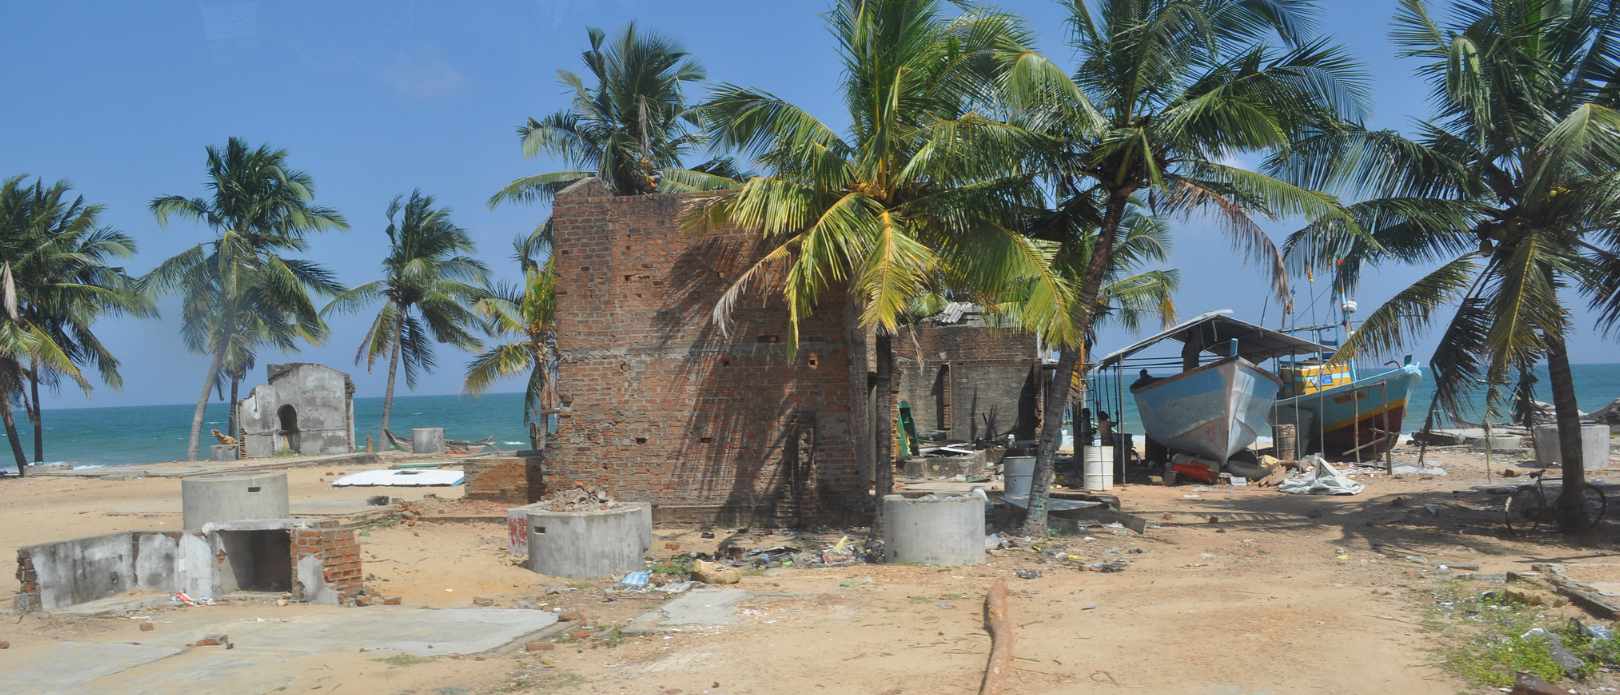 Destruction along the coast of Sri Lanka after the 2004 tsunami, still visible in 2011